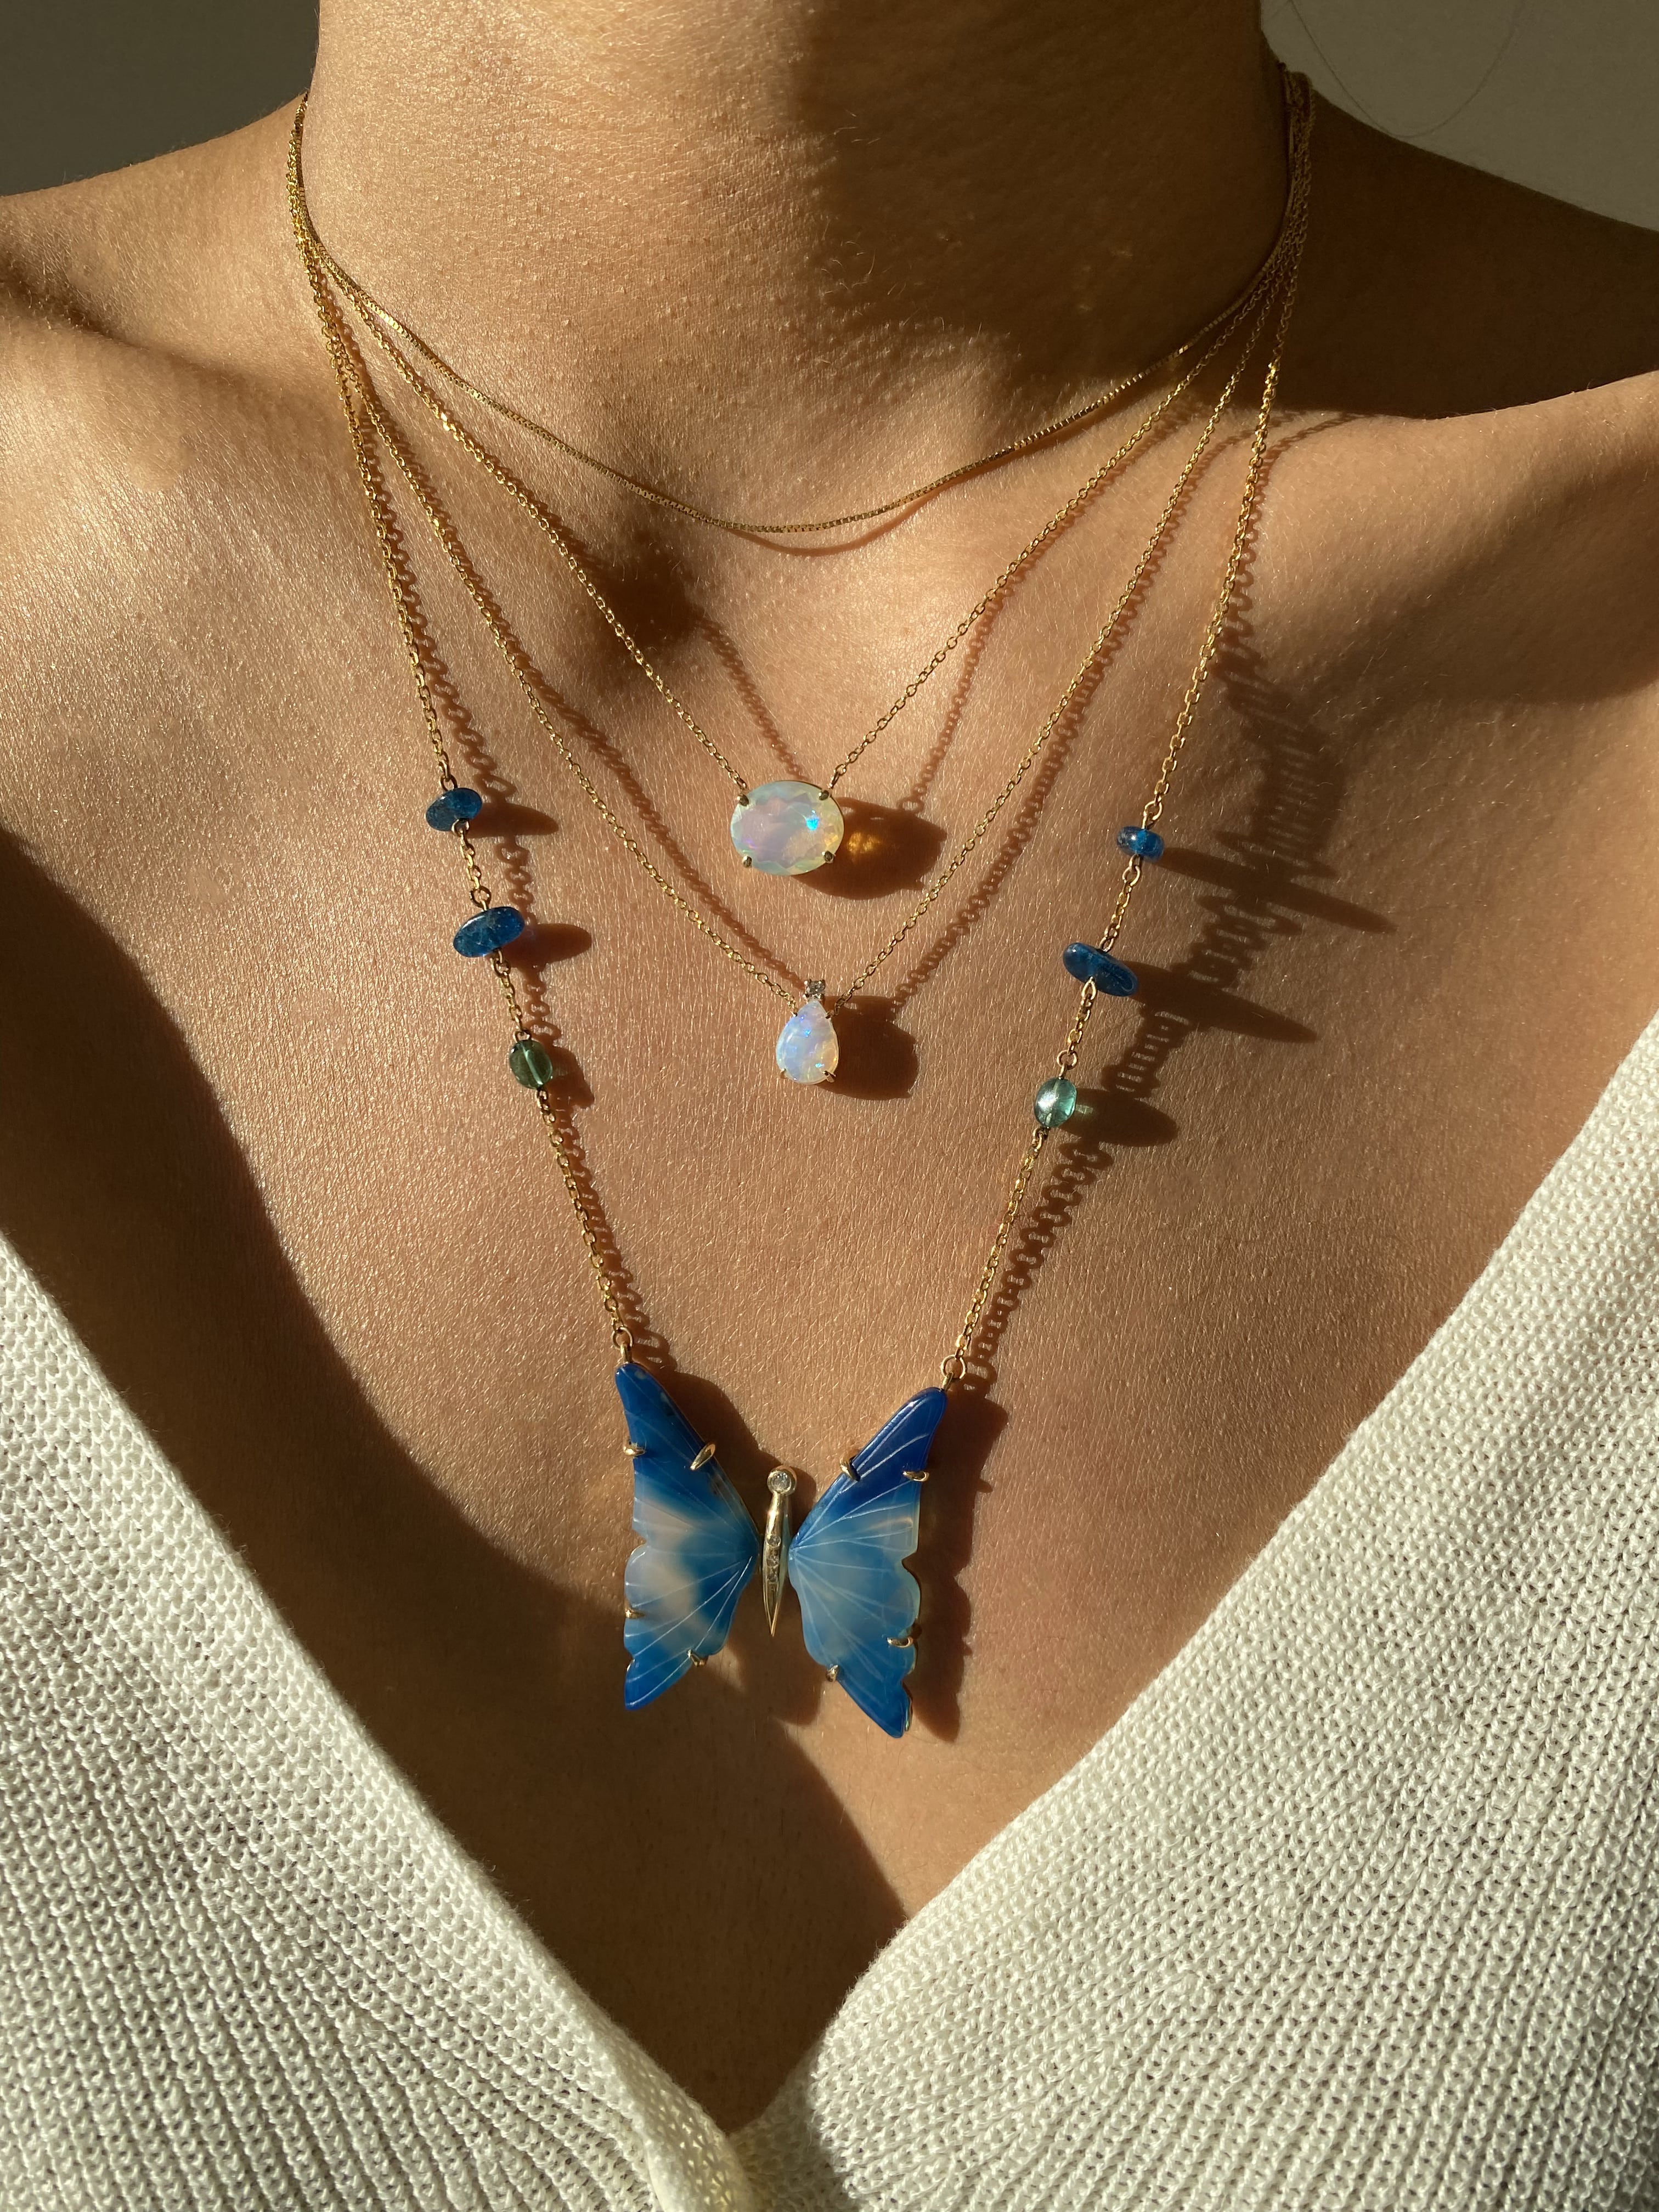 Handmade Gold & Sapphire Blue Butterfly Necklace